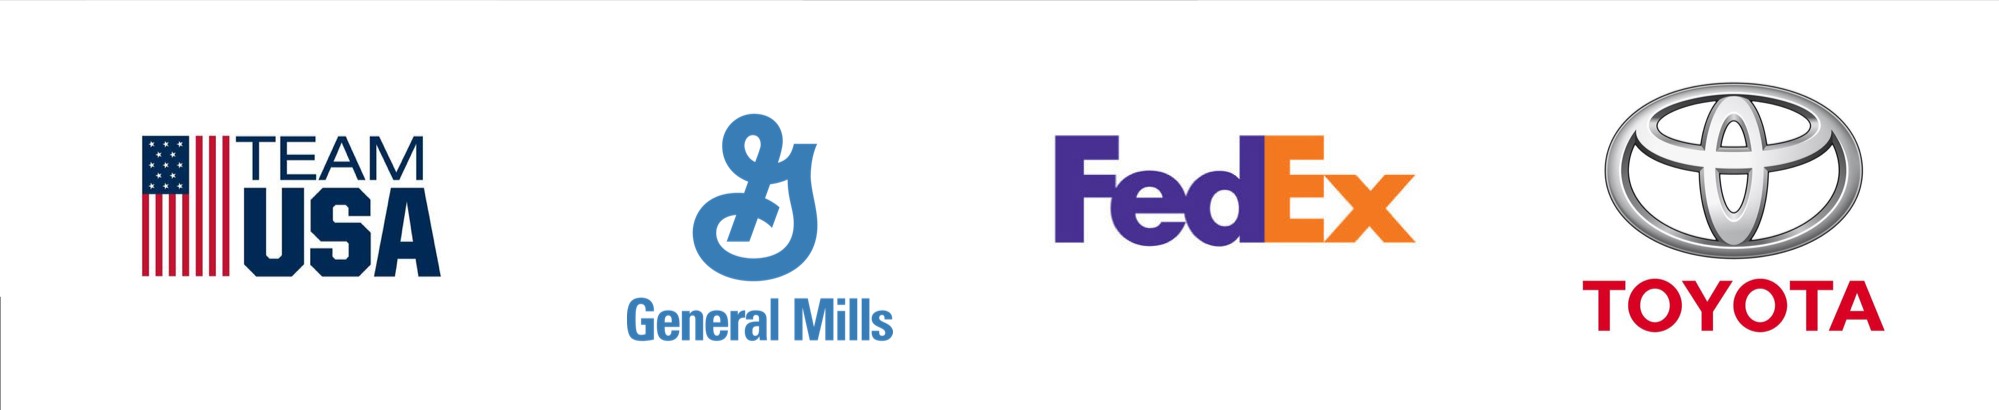 Team USA, General Mills, FedEx and Toyota logos